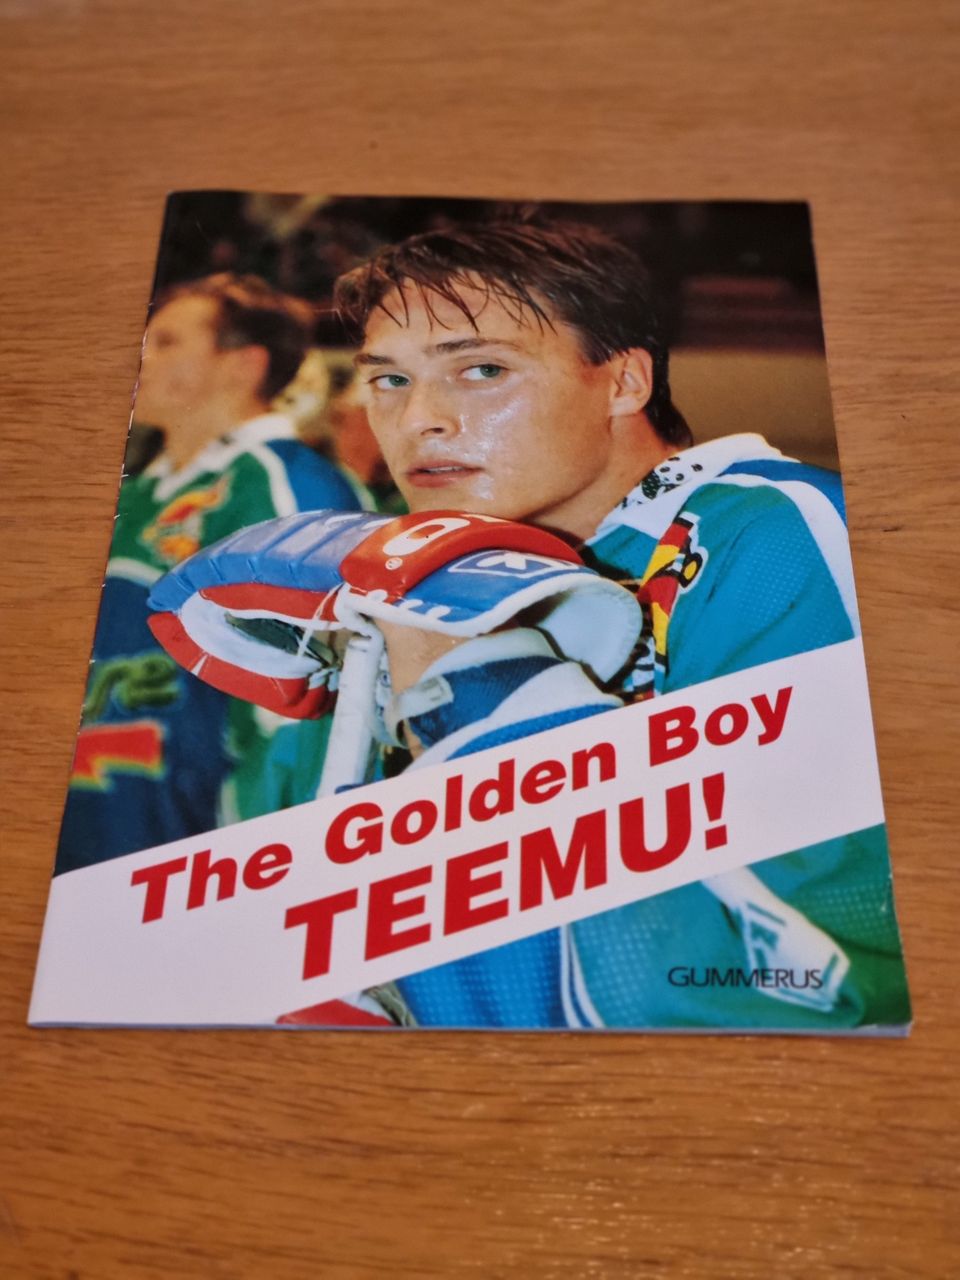 The golden boy Teemu